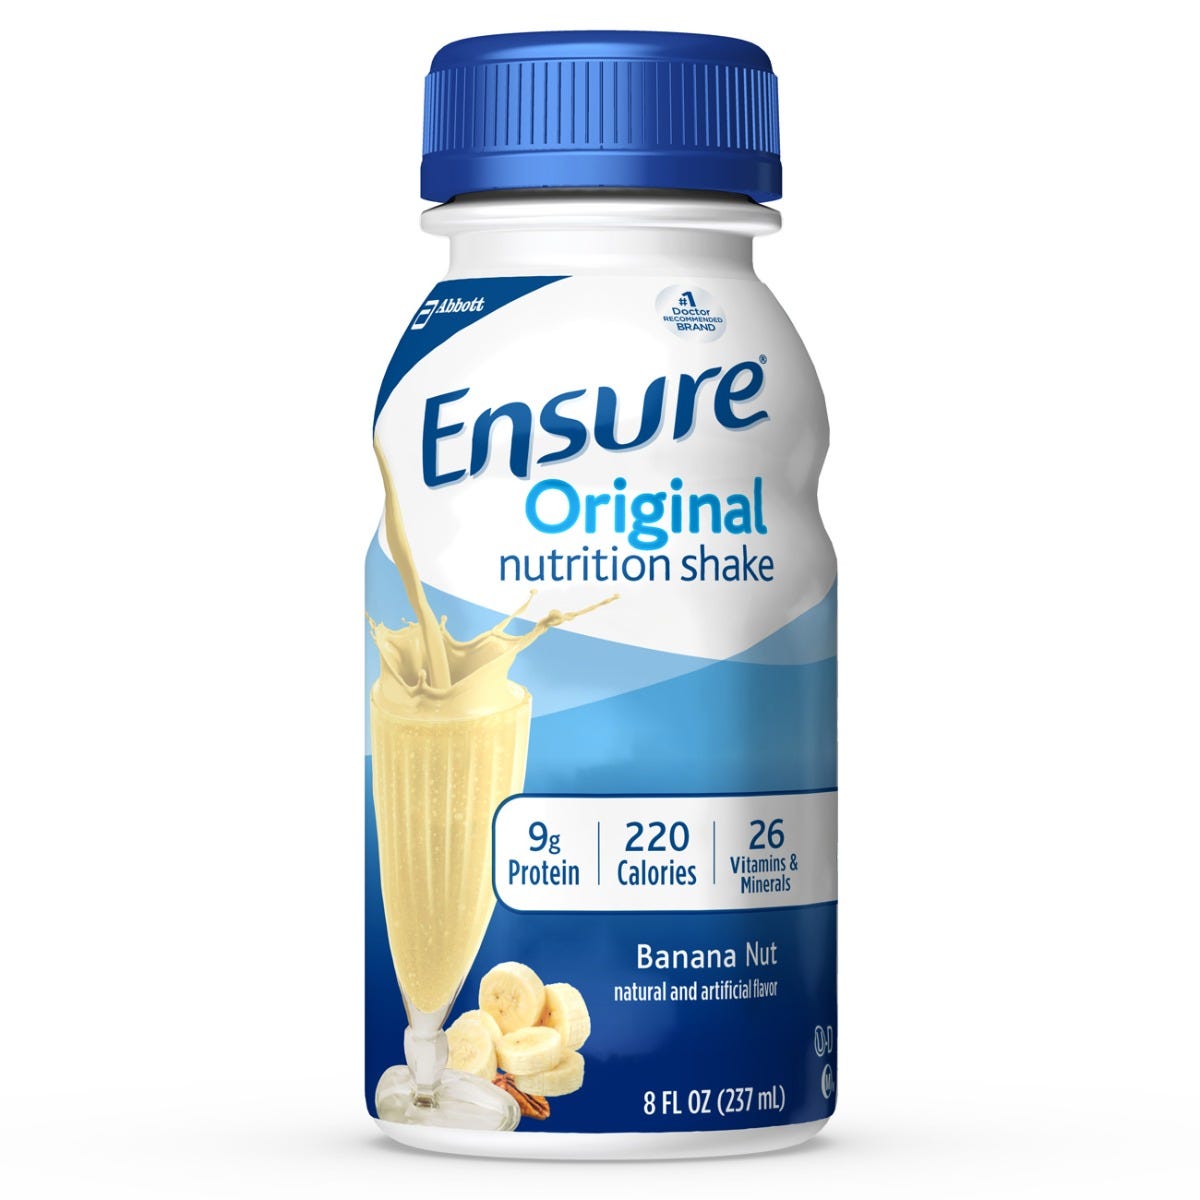 Ensure Original Nutrition Shake / Banana Nut / 8 fl oz